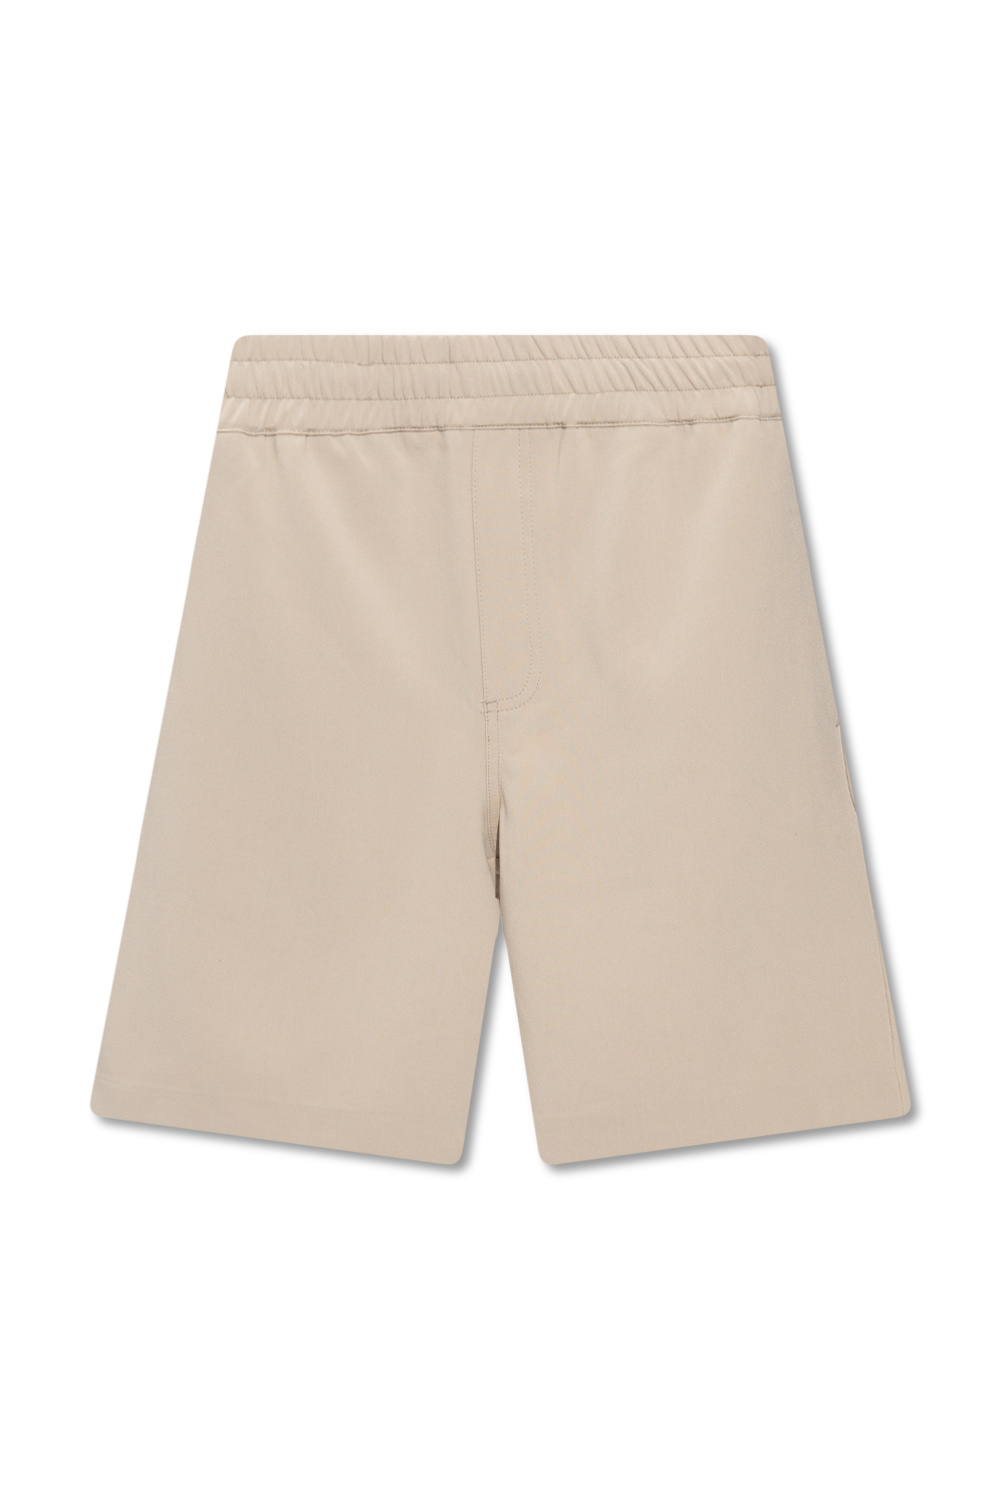 Samsøe Samsøe ‘Smith’ shorts